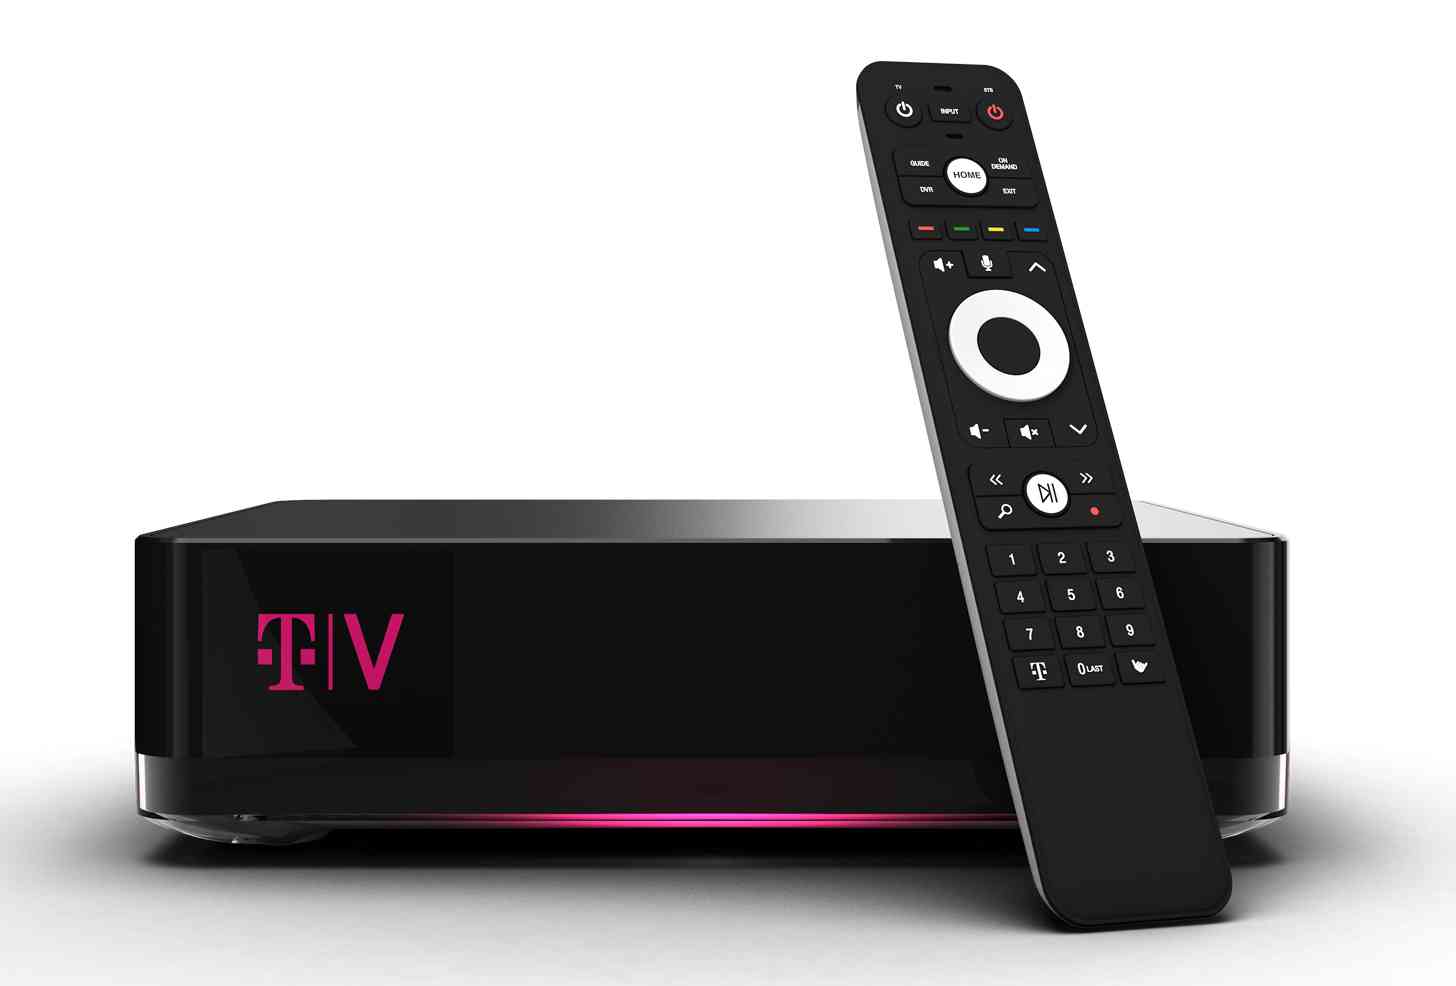 TVision Home set-top box remote